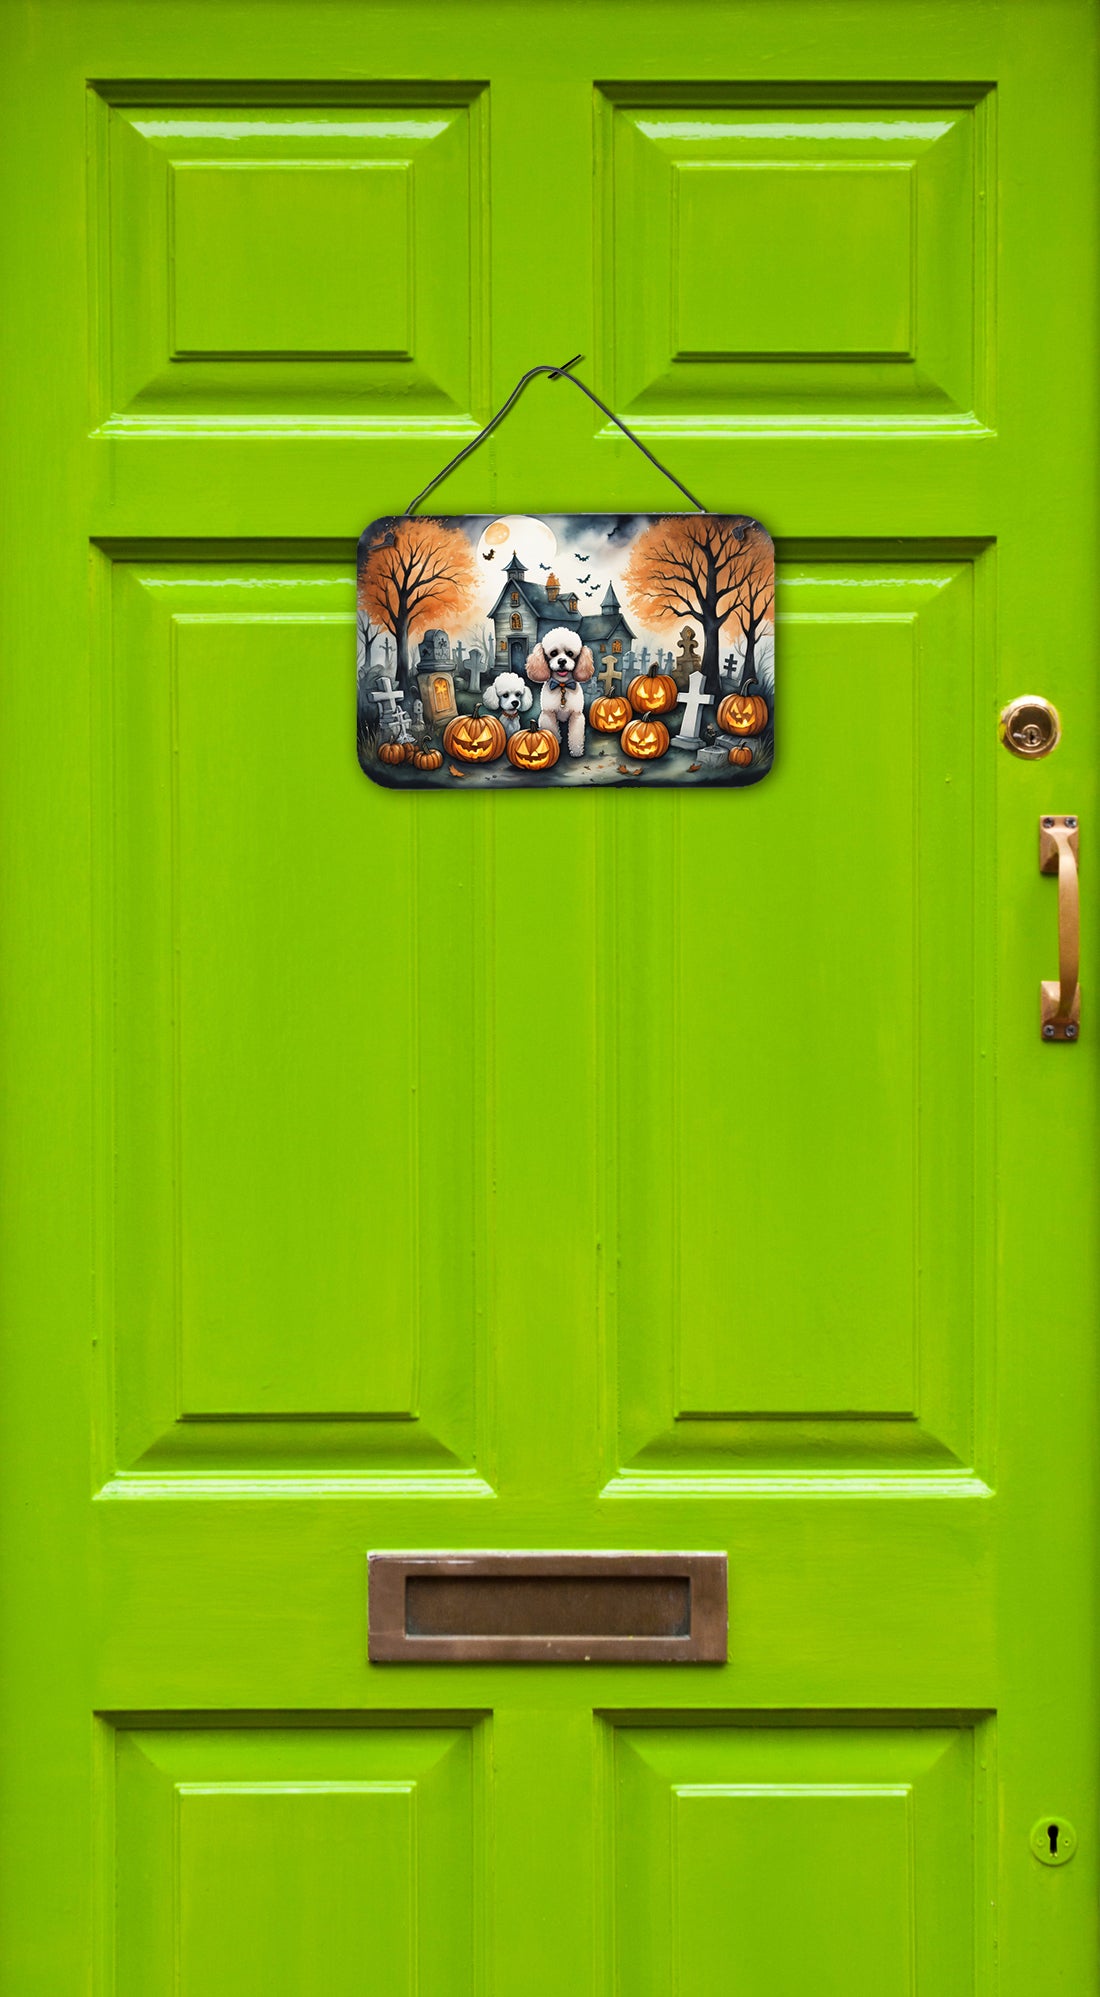 Buy this Poodle Spooky Halloween Wall or Door Hanging Prints